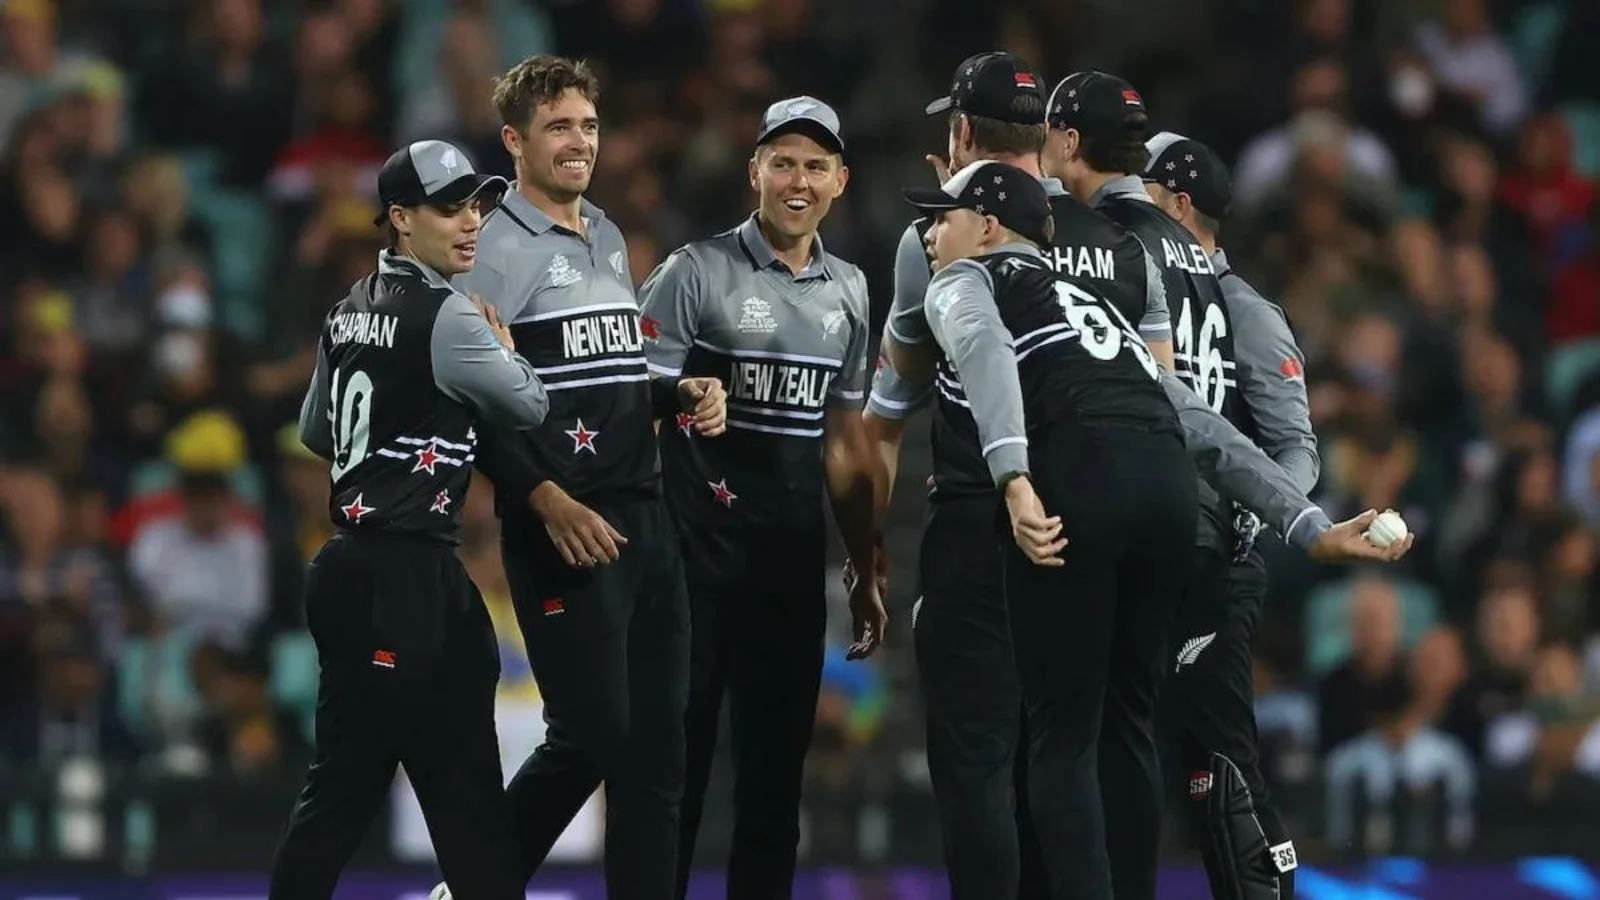 New Zealand cricket team celebrating during a night match.